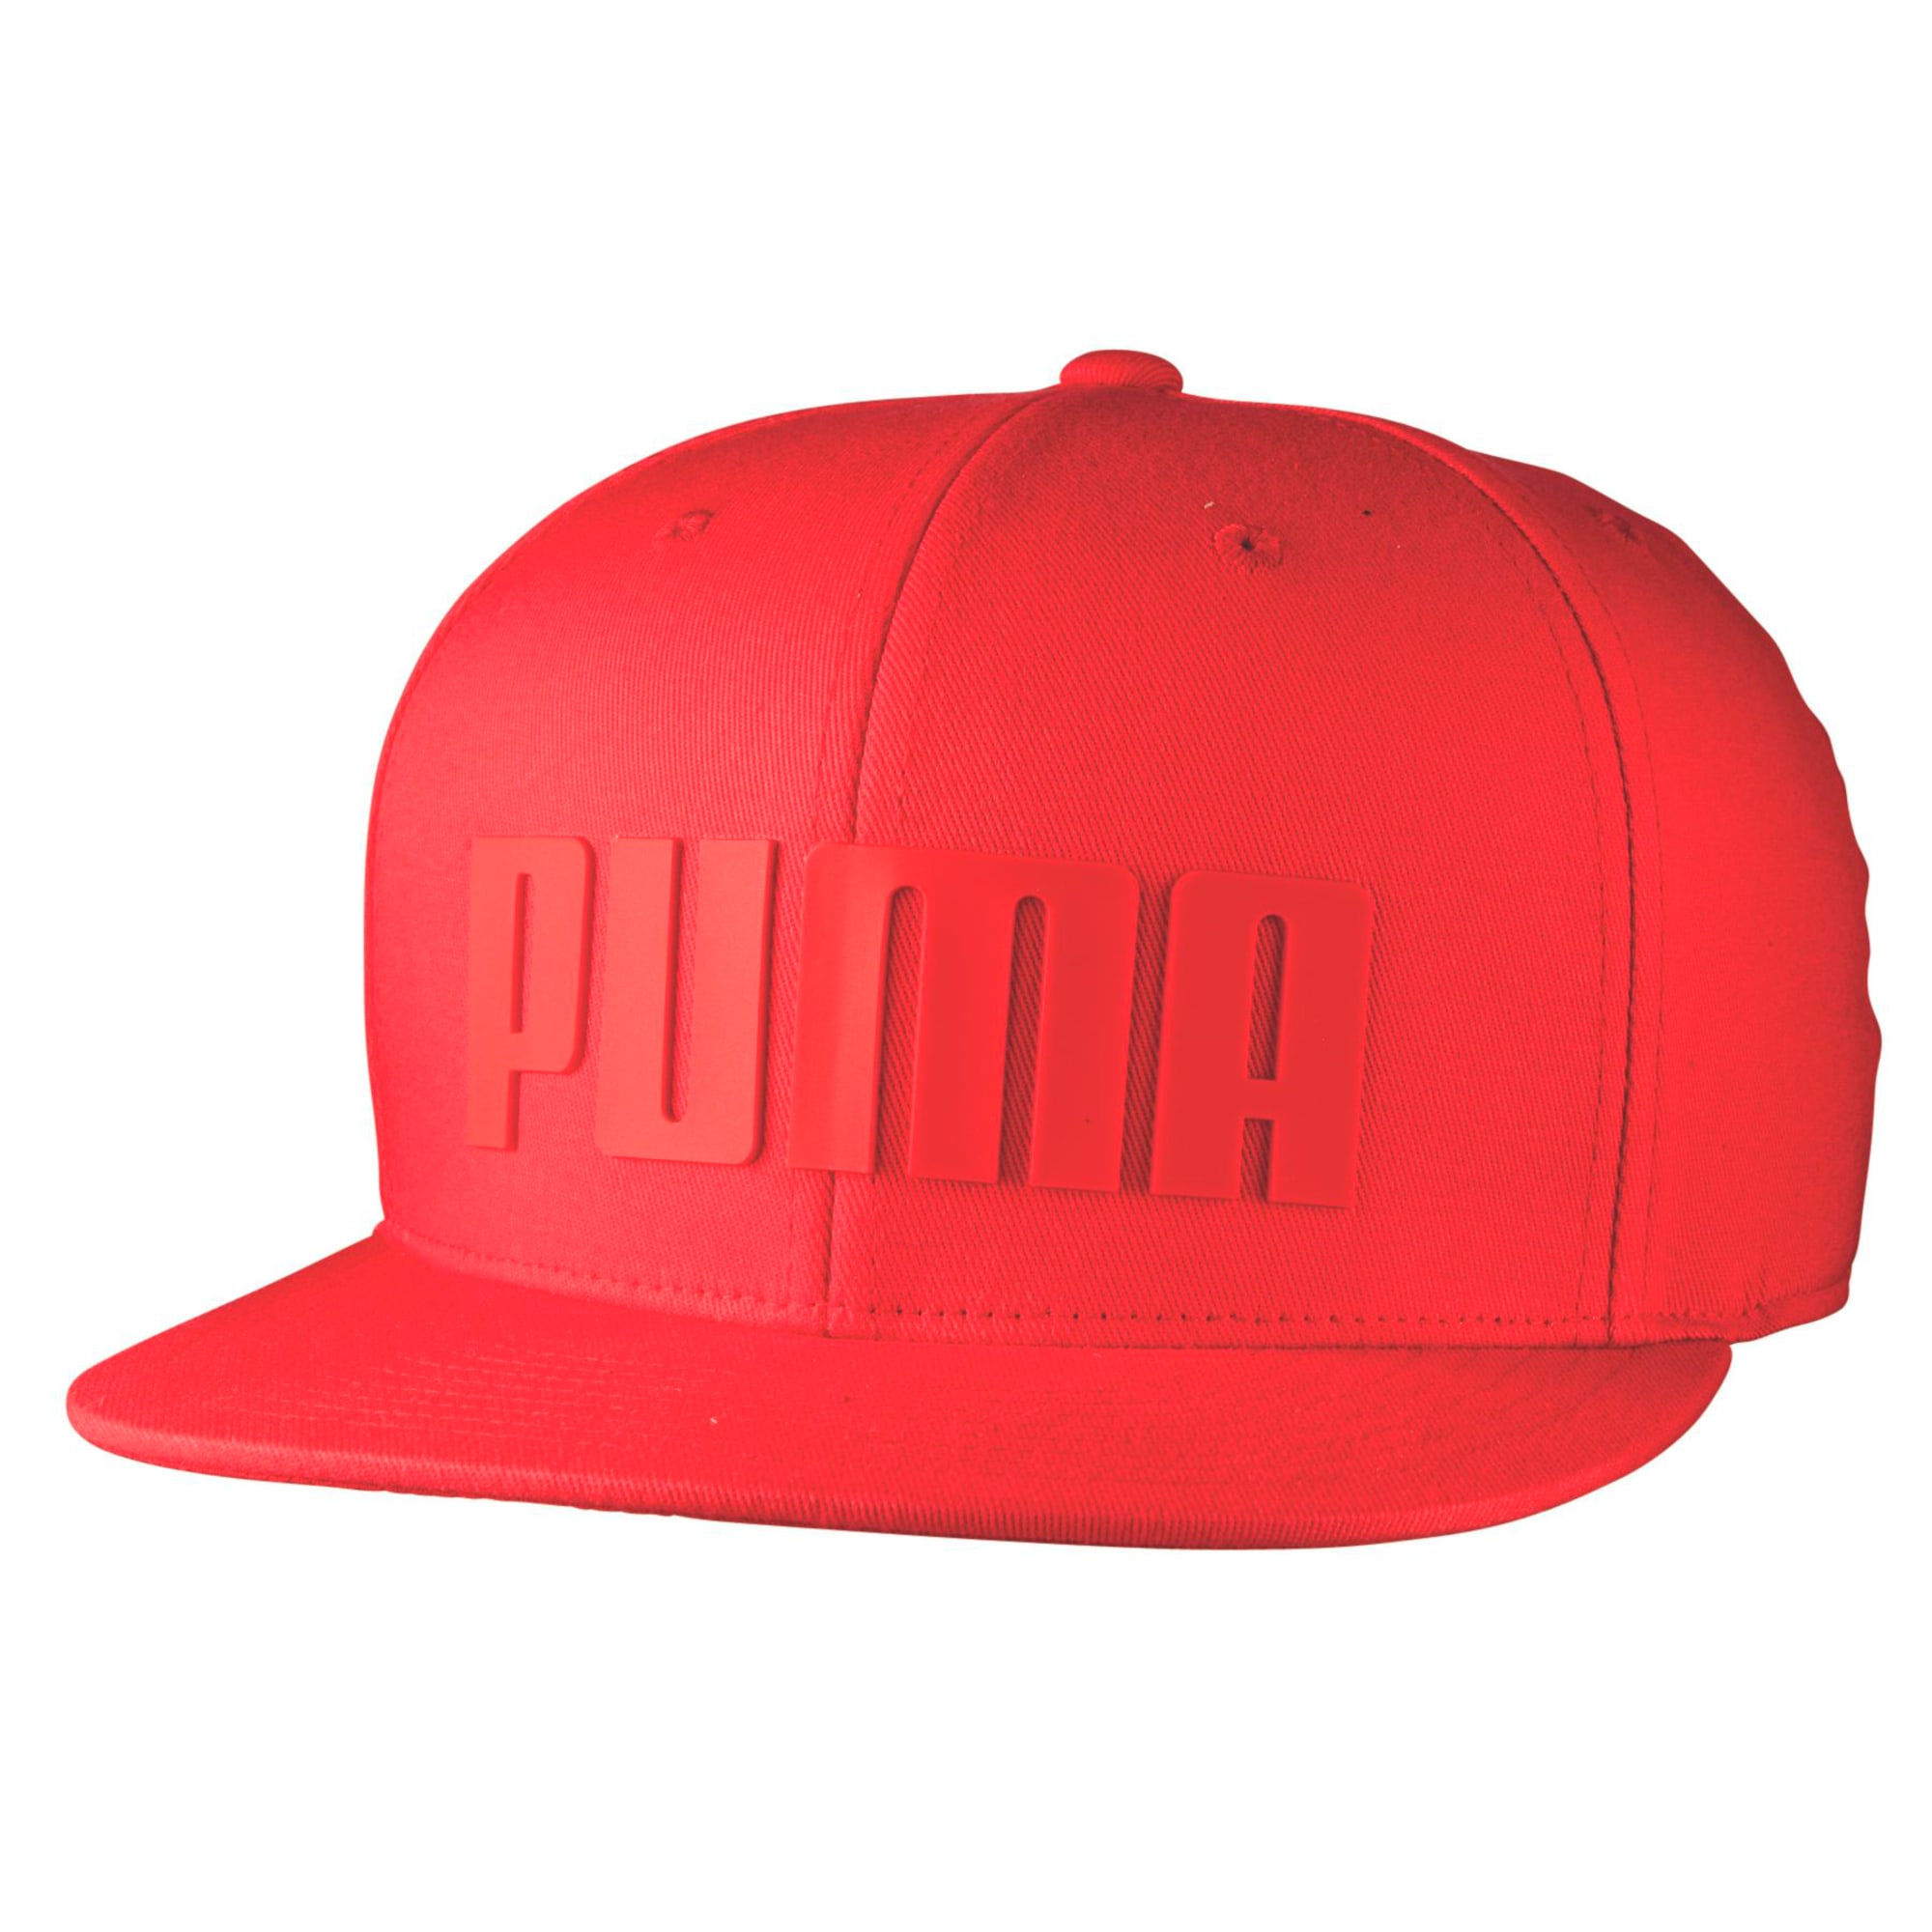 Capital 110 Snapback Hat | PUMA US